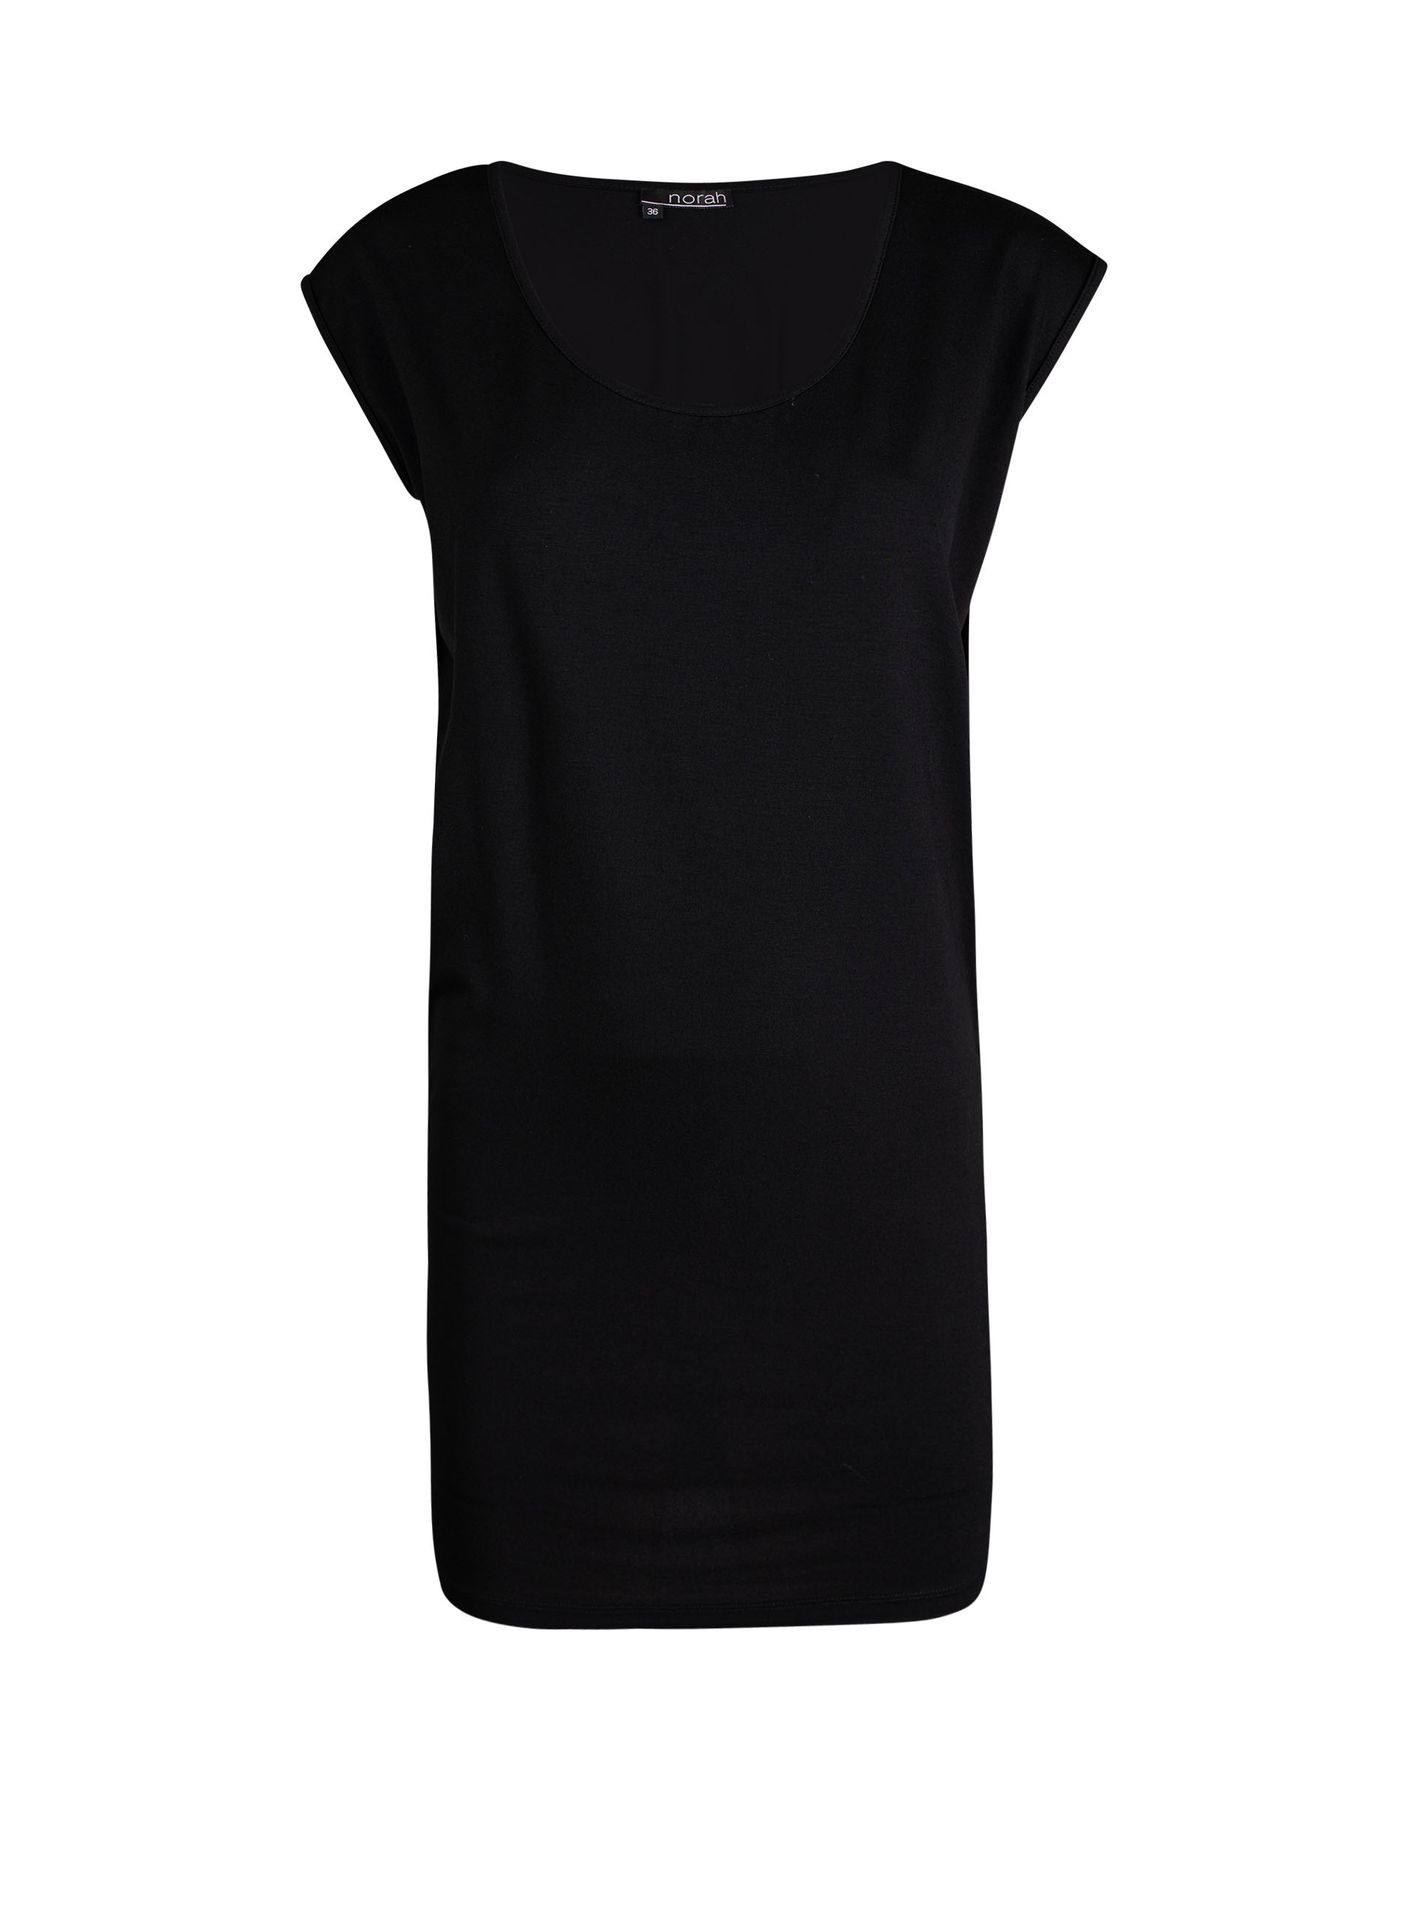 Norah Shirt zwart black 203697-001